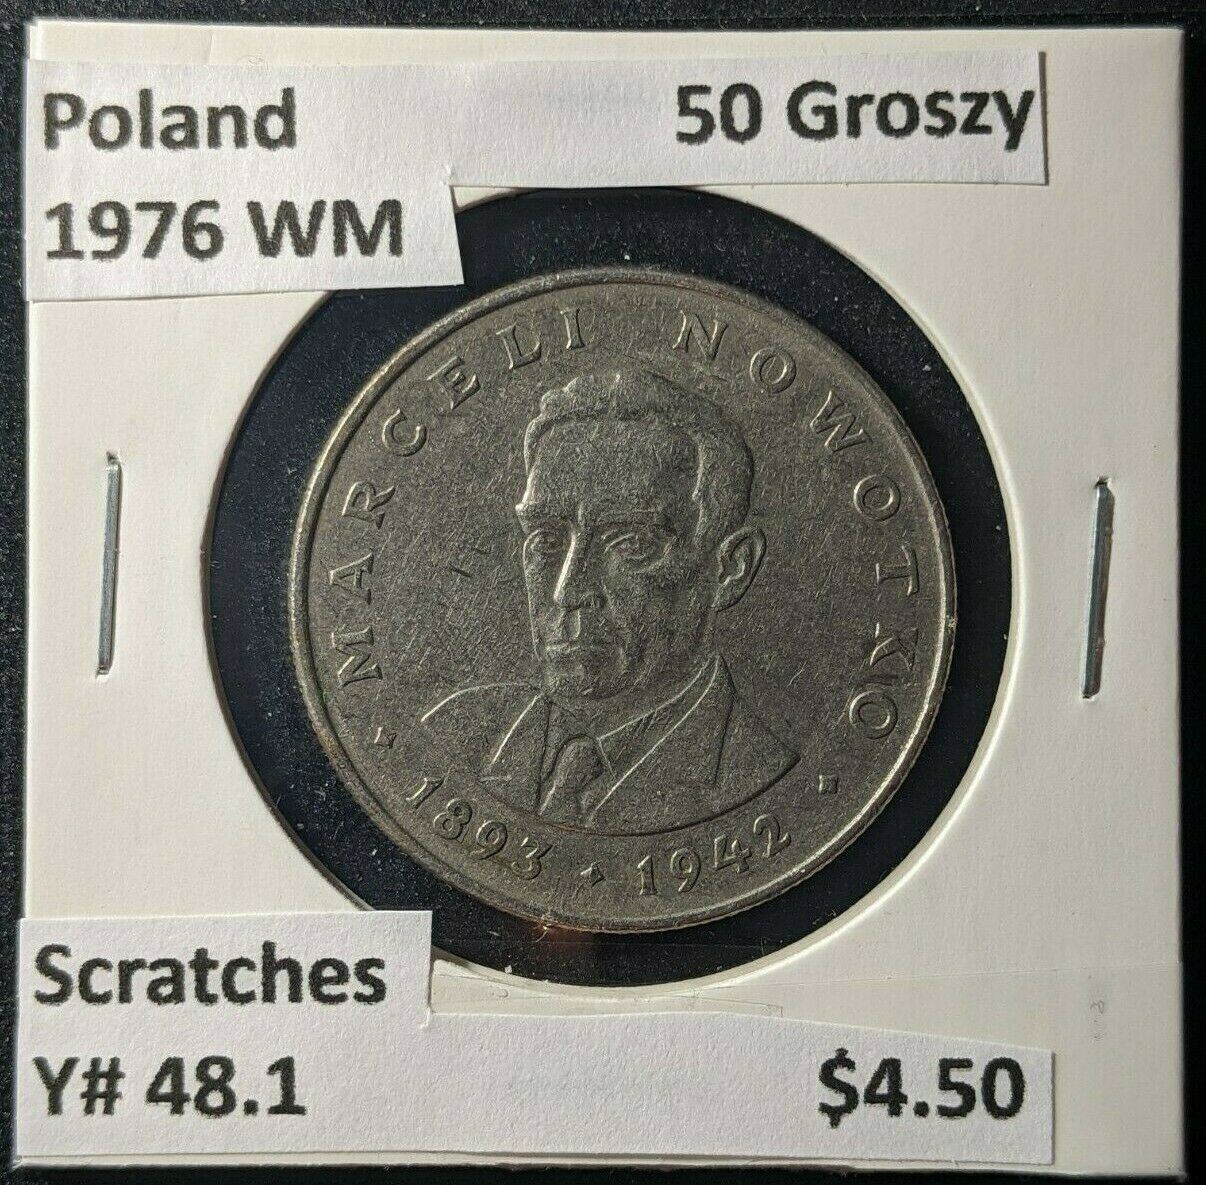 Poland WN 1976 50 Groszy Y# 48.1 Scratches #412